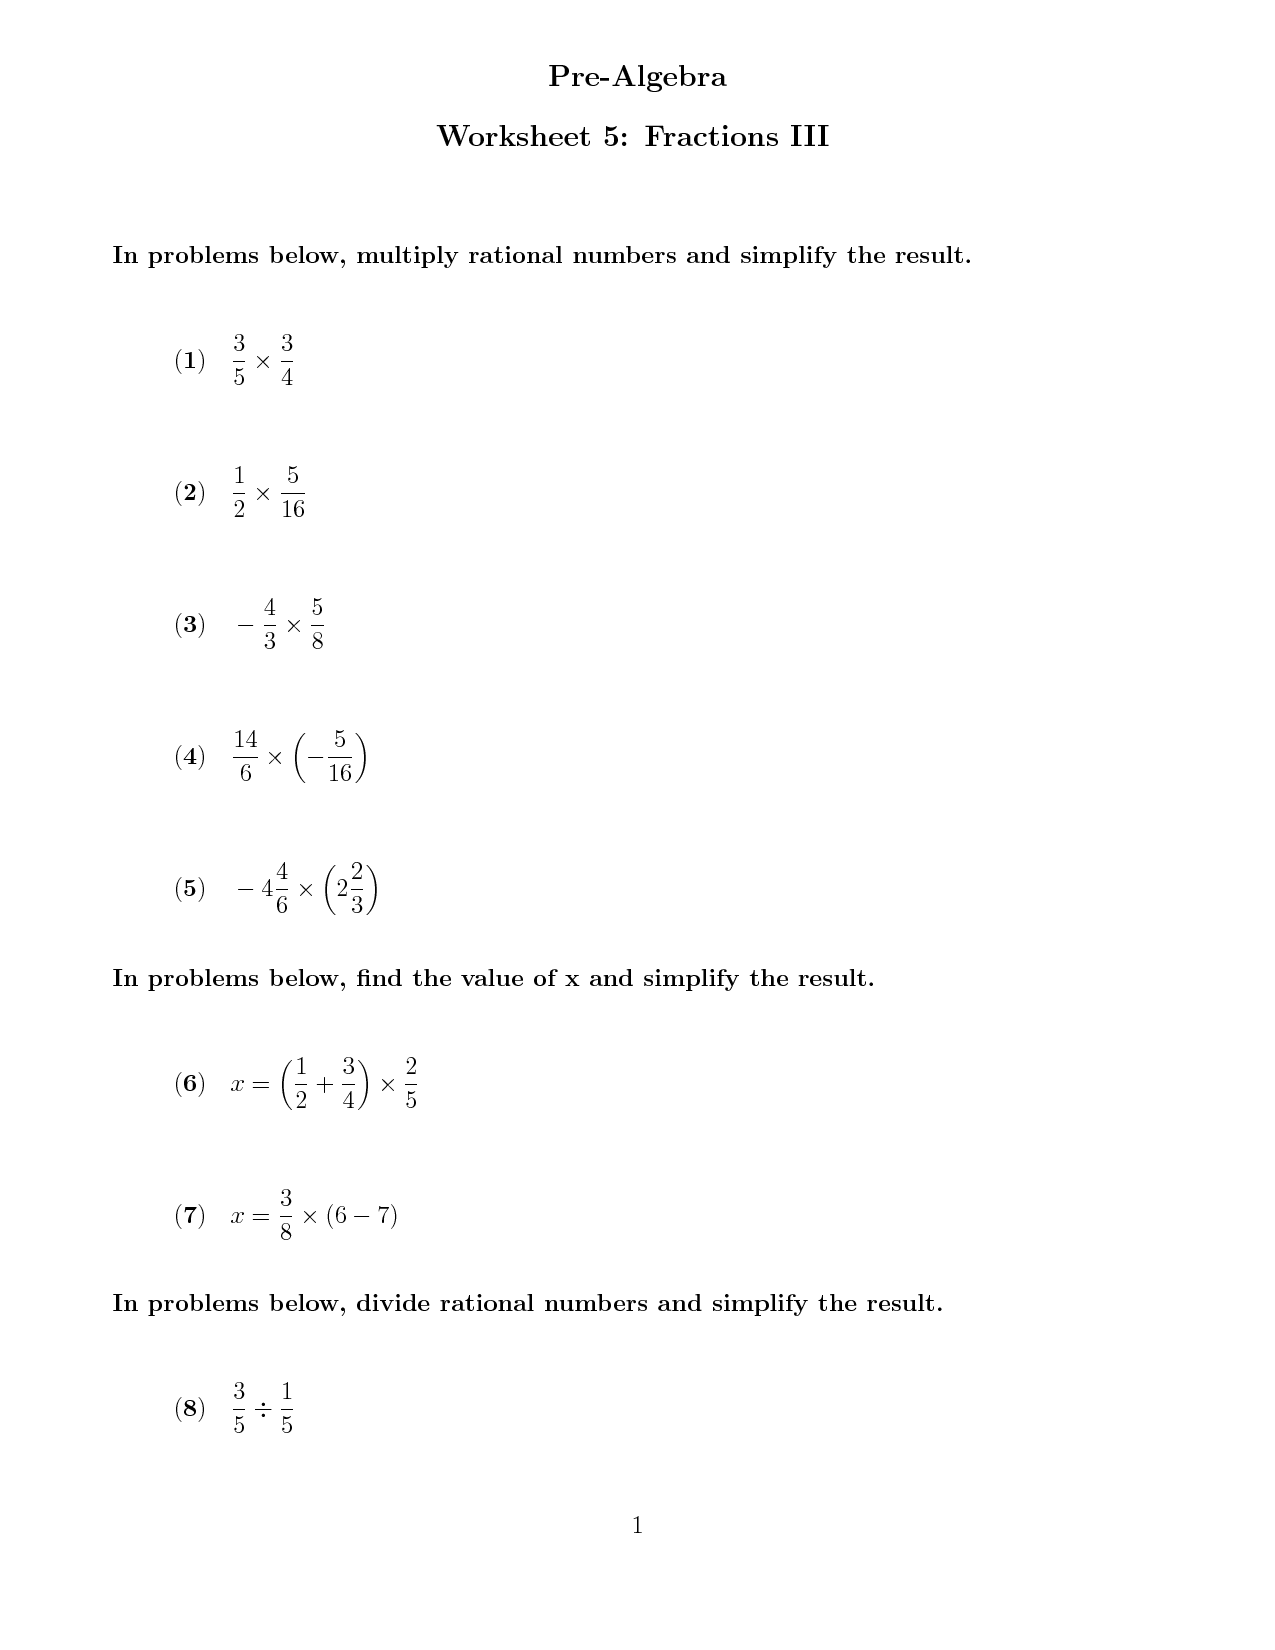 Pre-Algebra and Fractions Worksheets